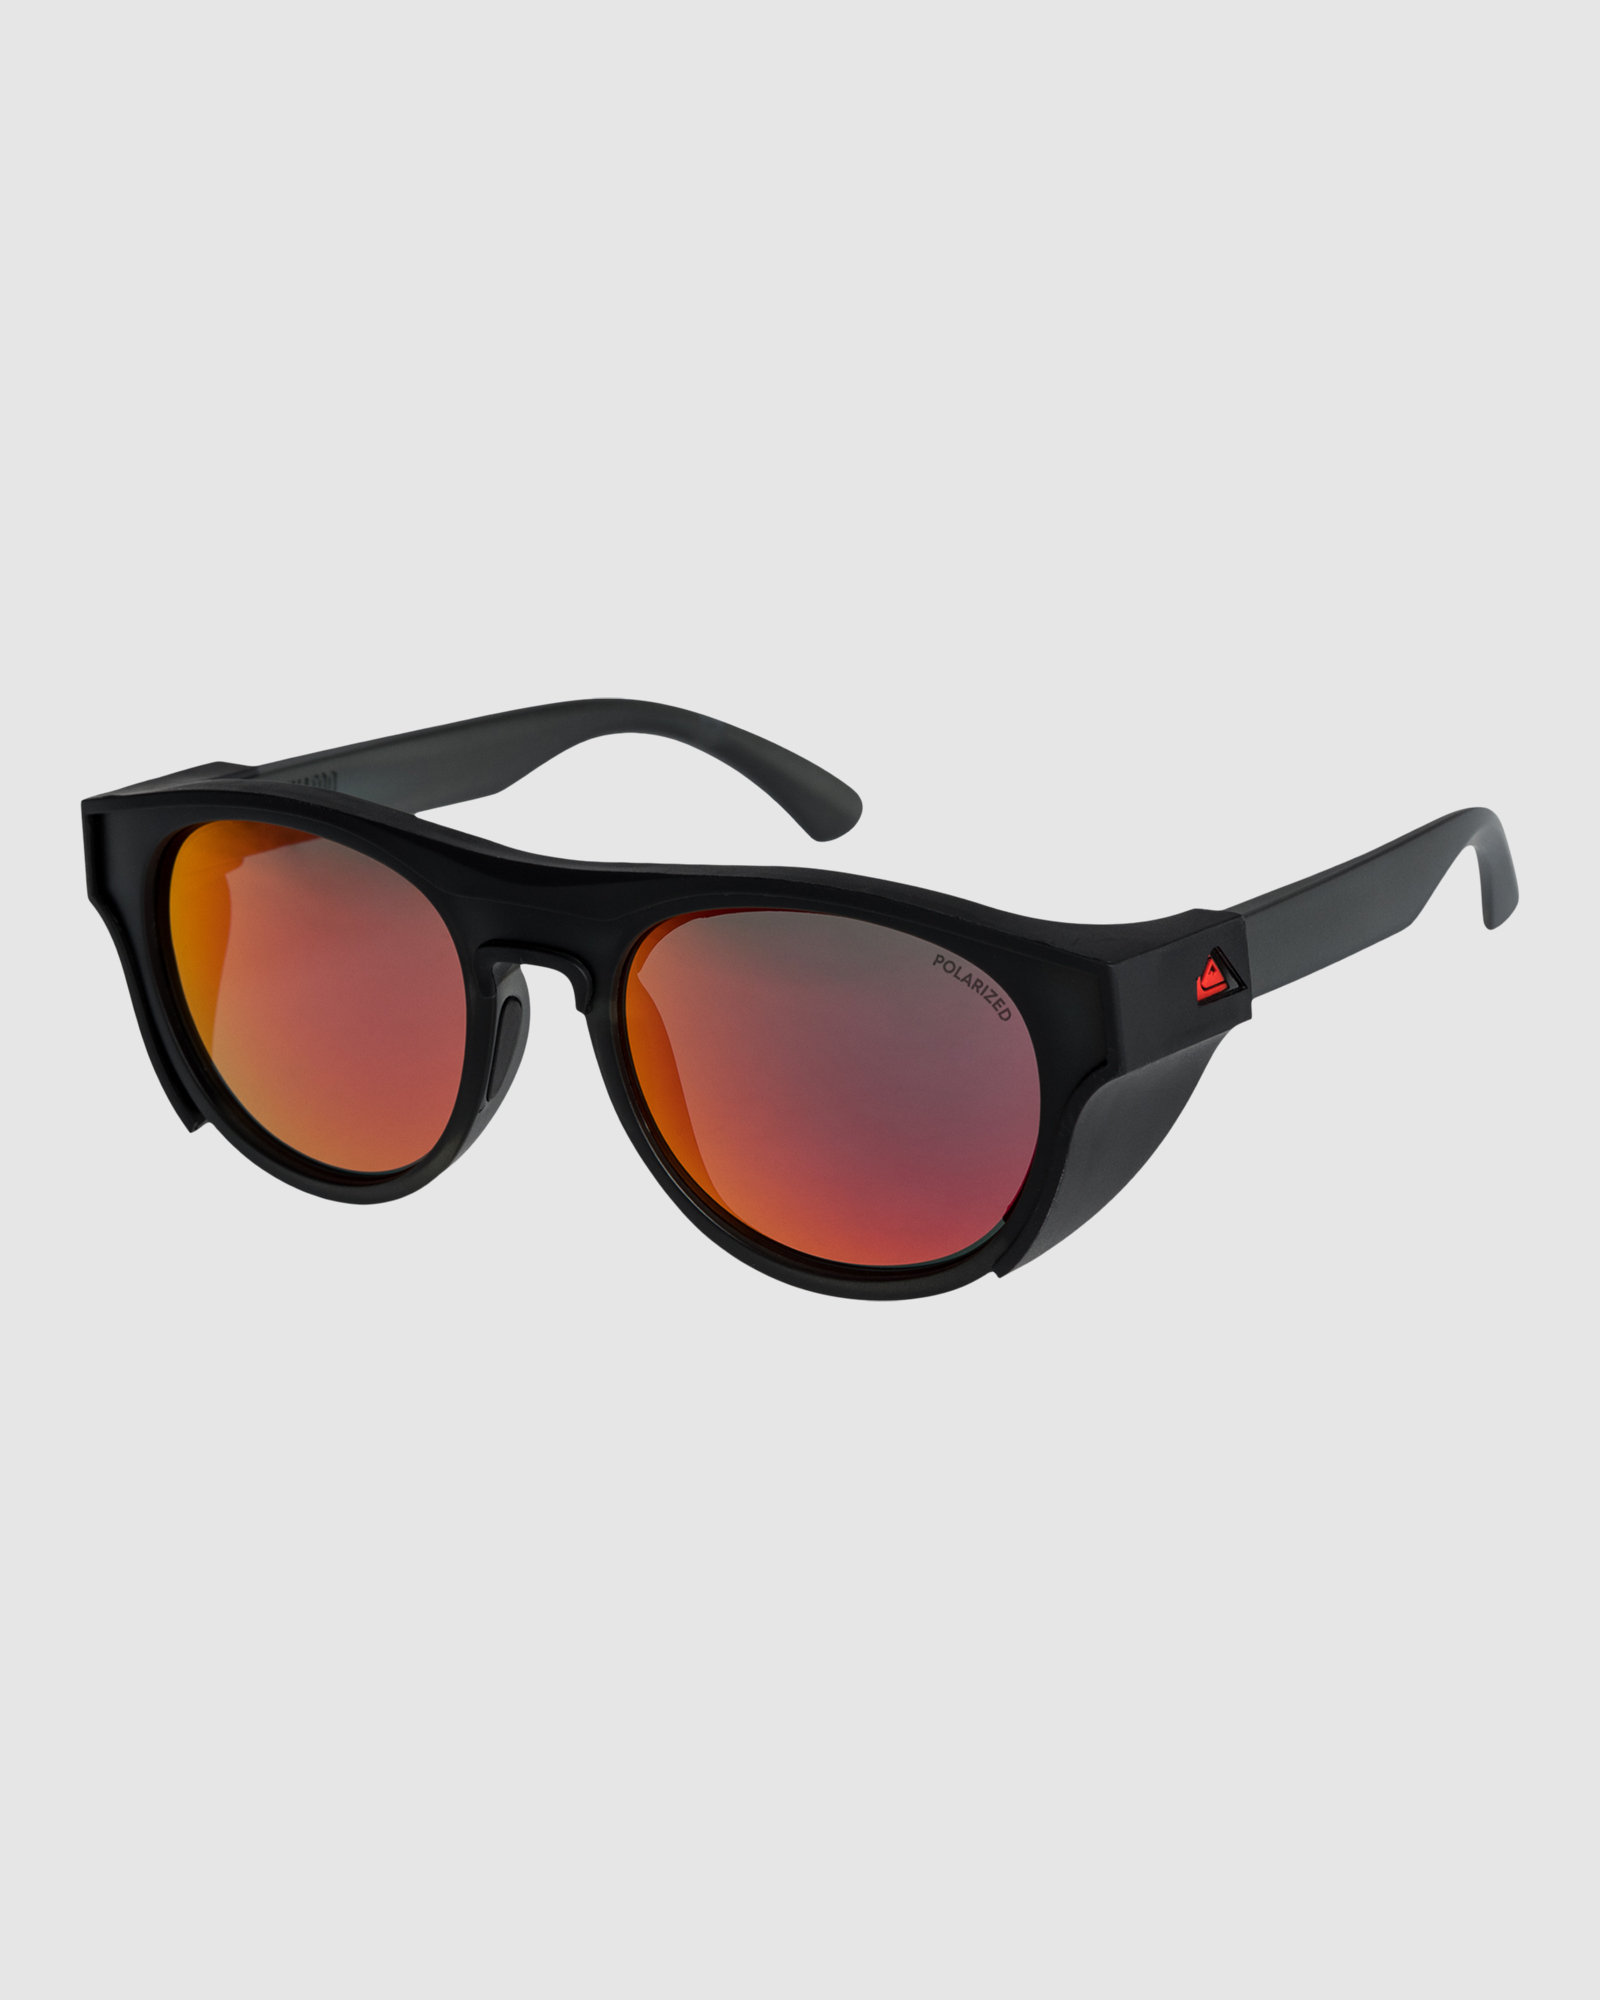 Quiksilver Eliminator+ P - Polarised Sunglasses For Men - Smoke Ml Q Red  Polar | SurfStitch